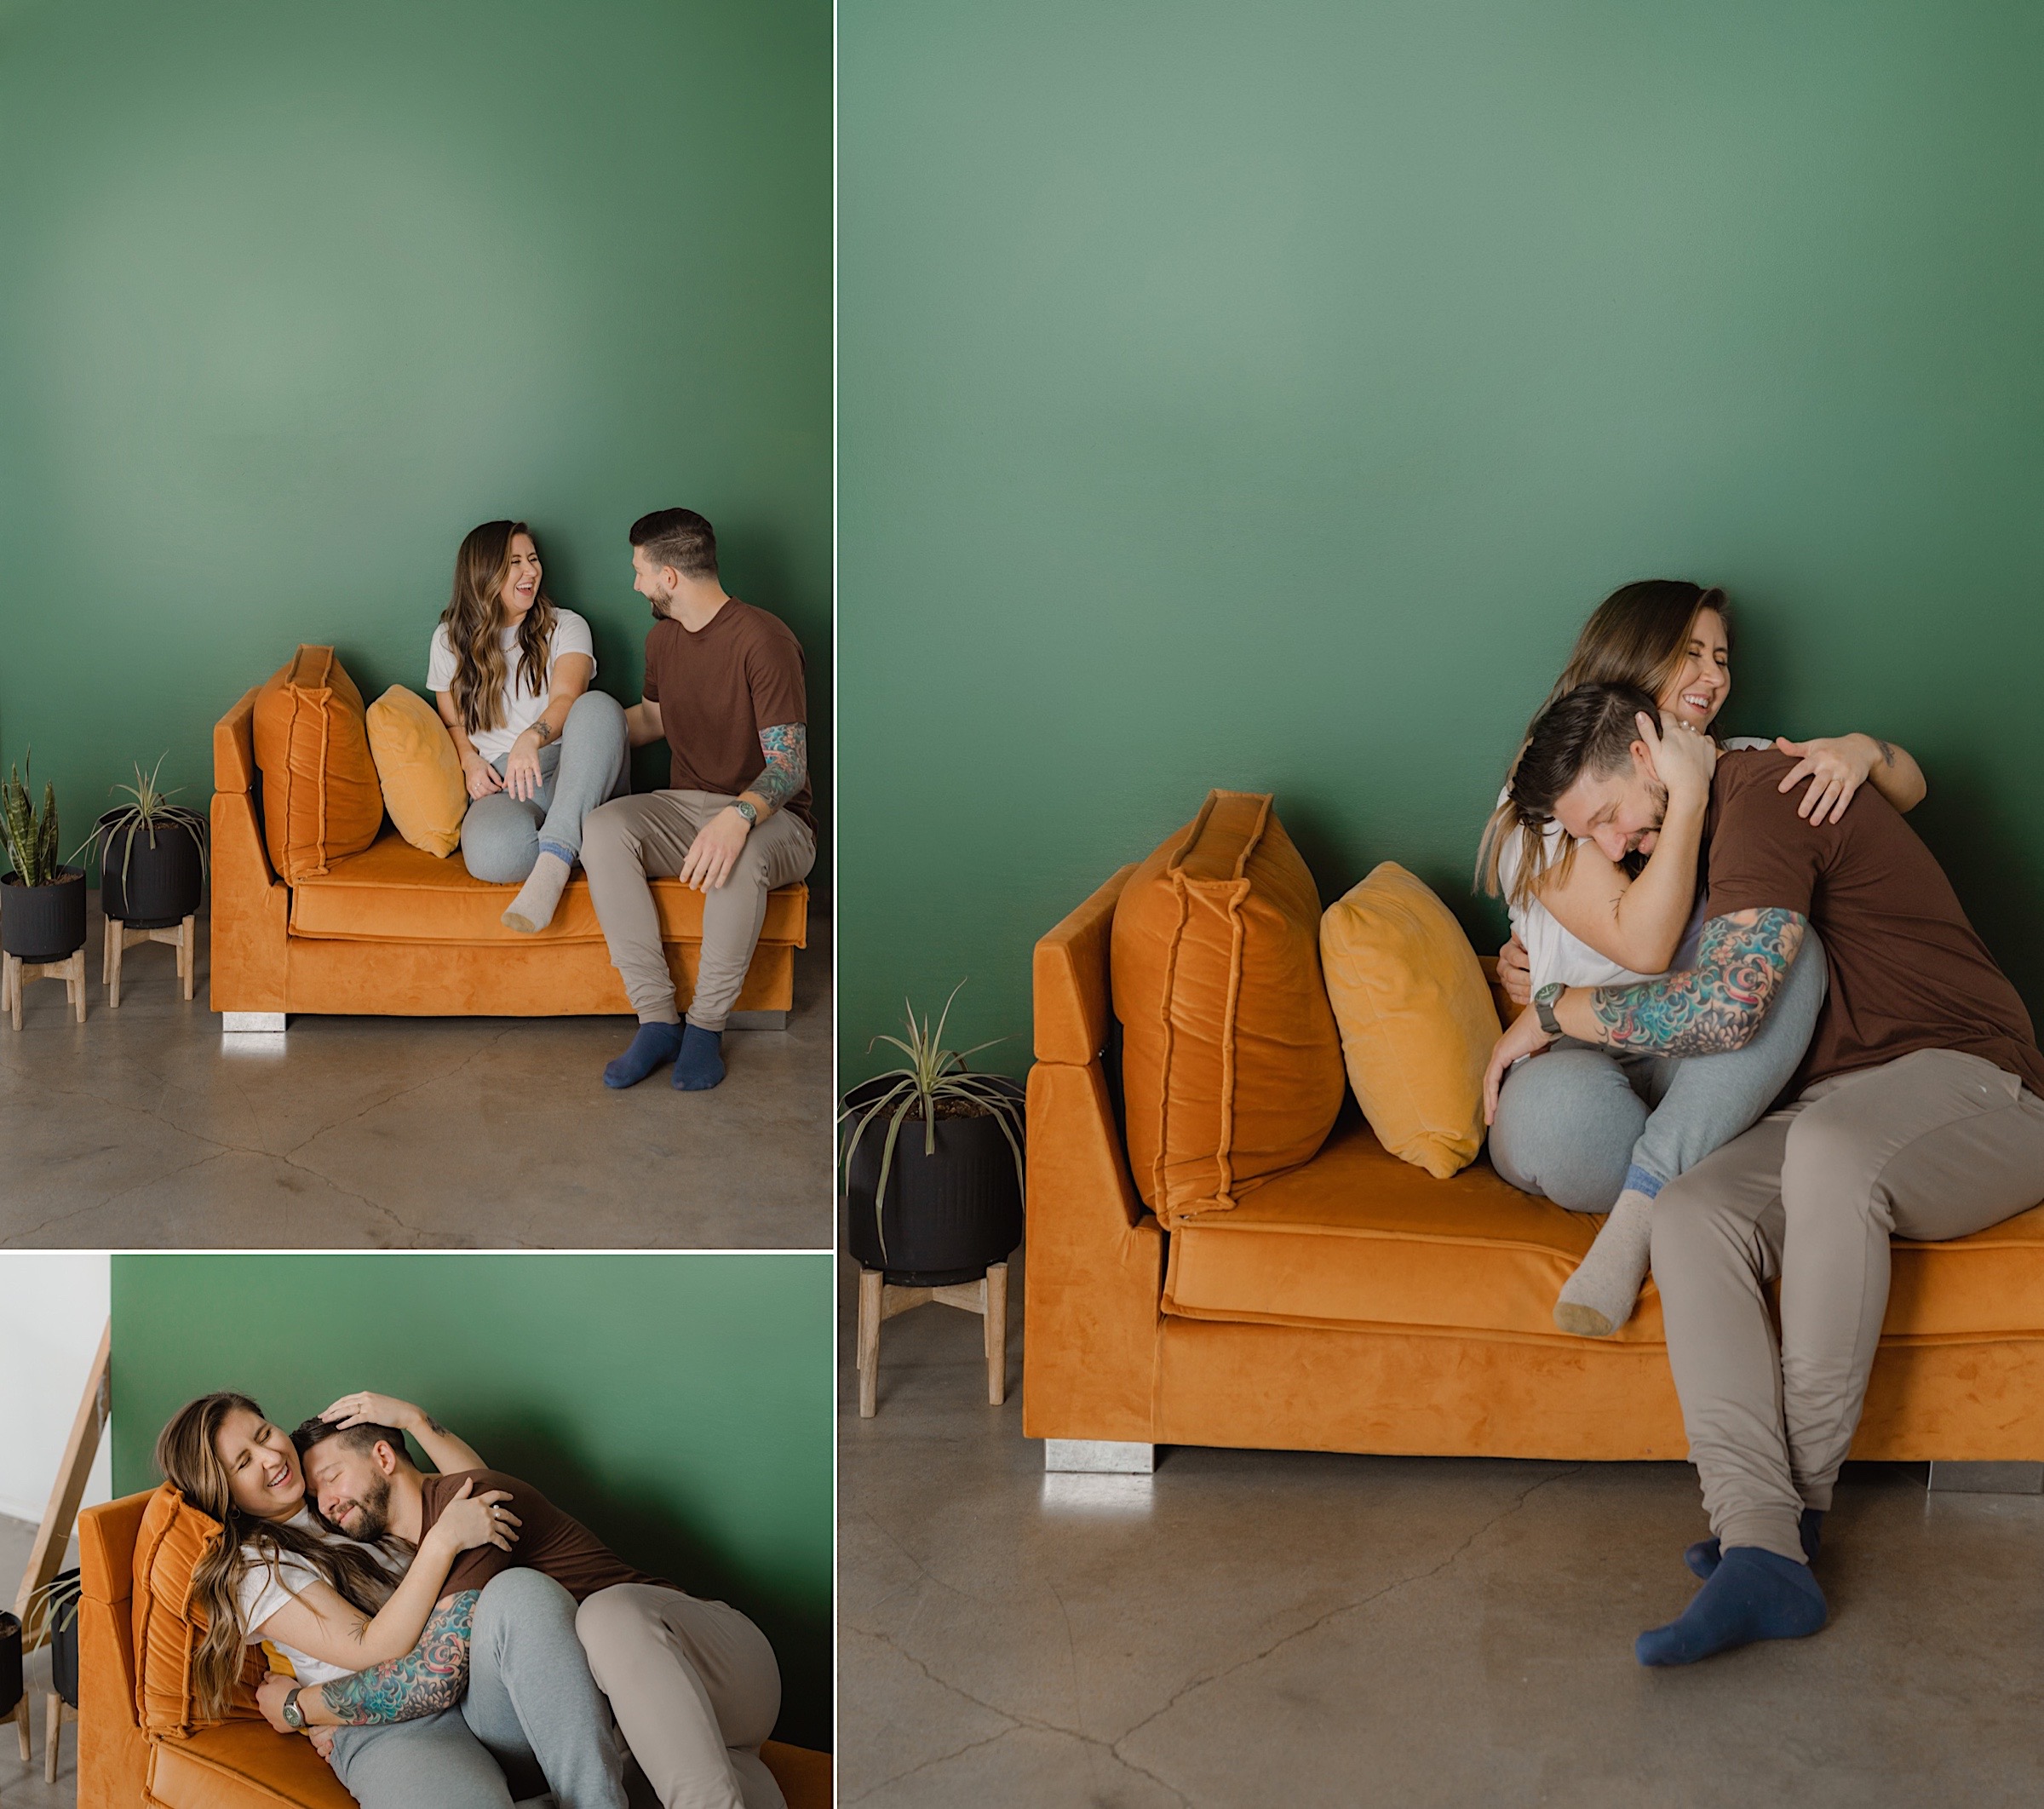 Minimalistic-Studio-Couple-Engagement-Session-White-Tshirts-neutral-charcoal-grey-backdrop-seattle-photographer